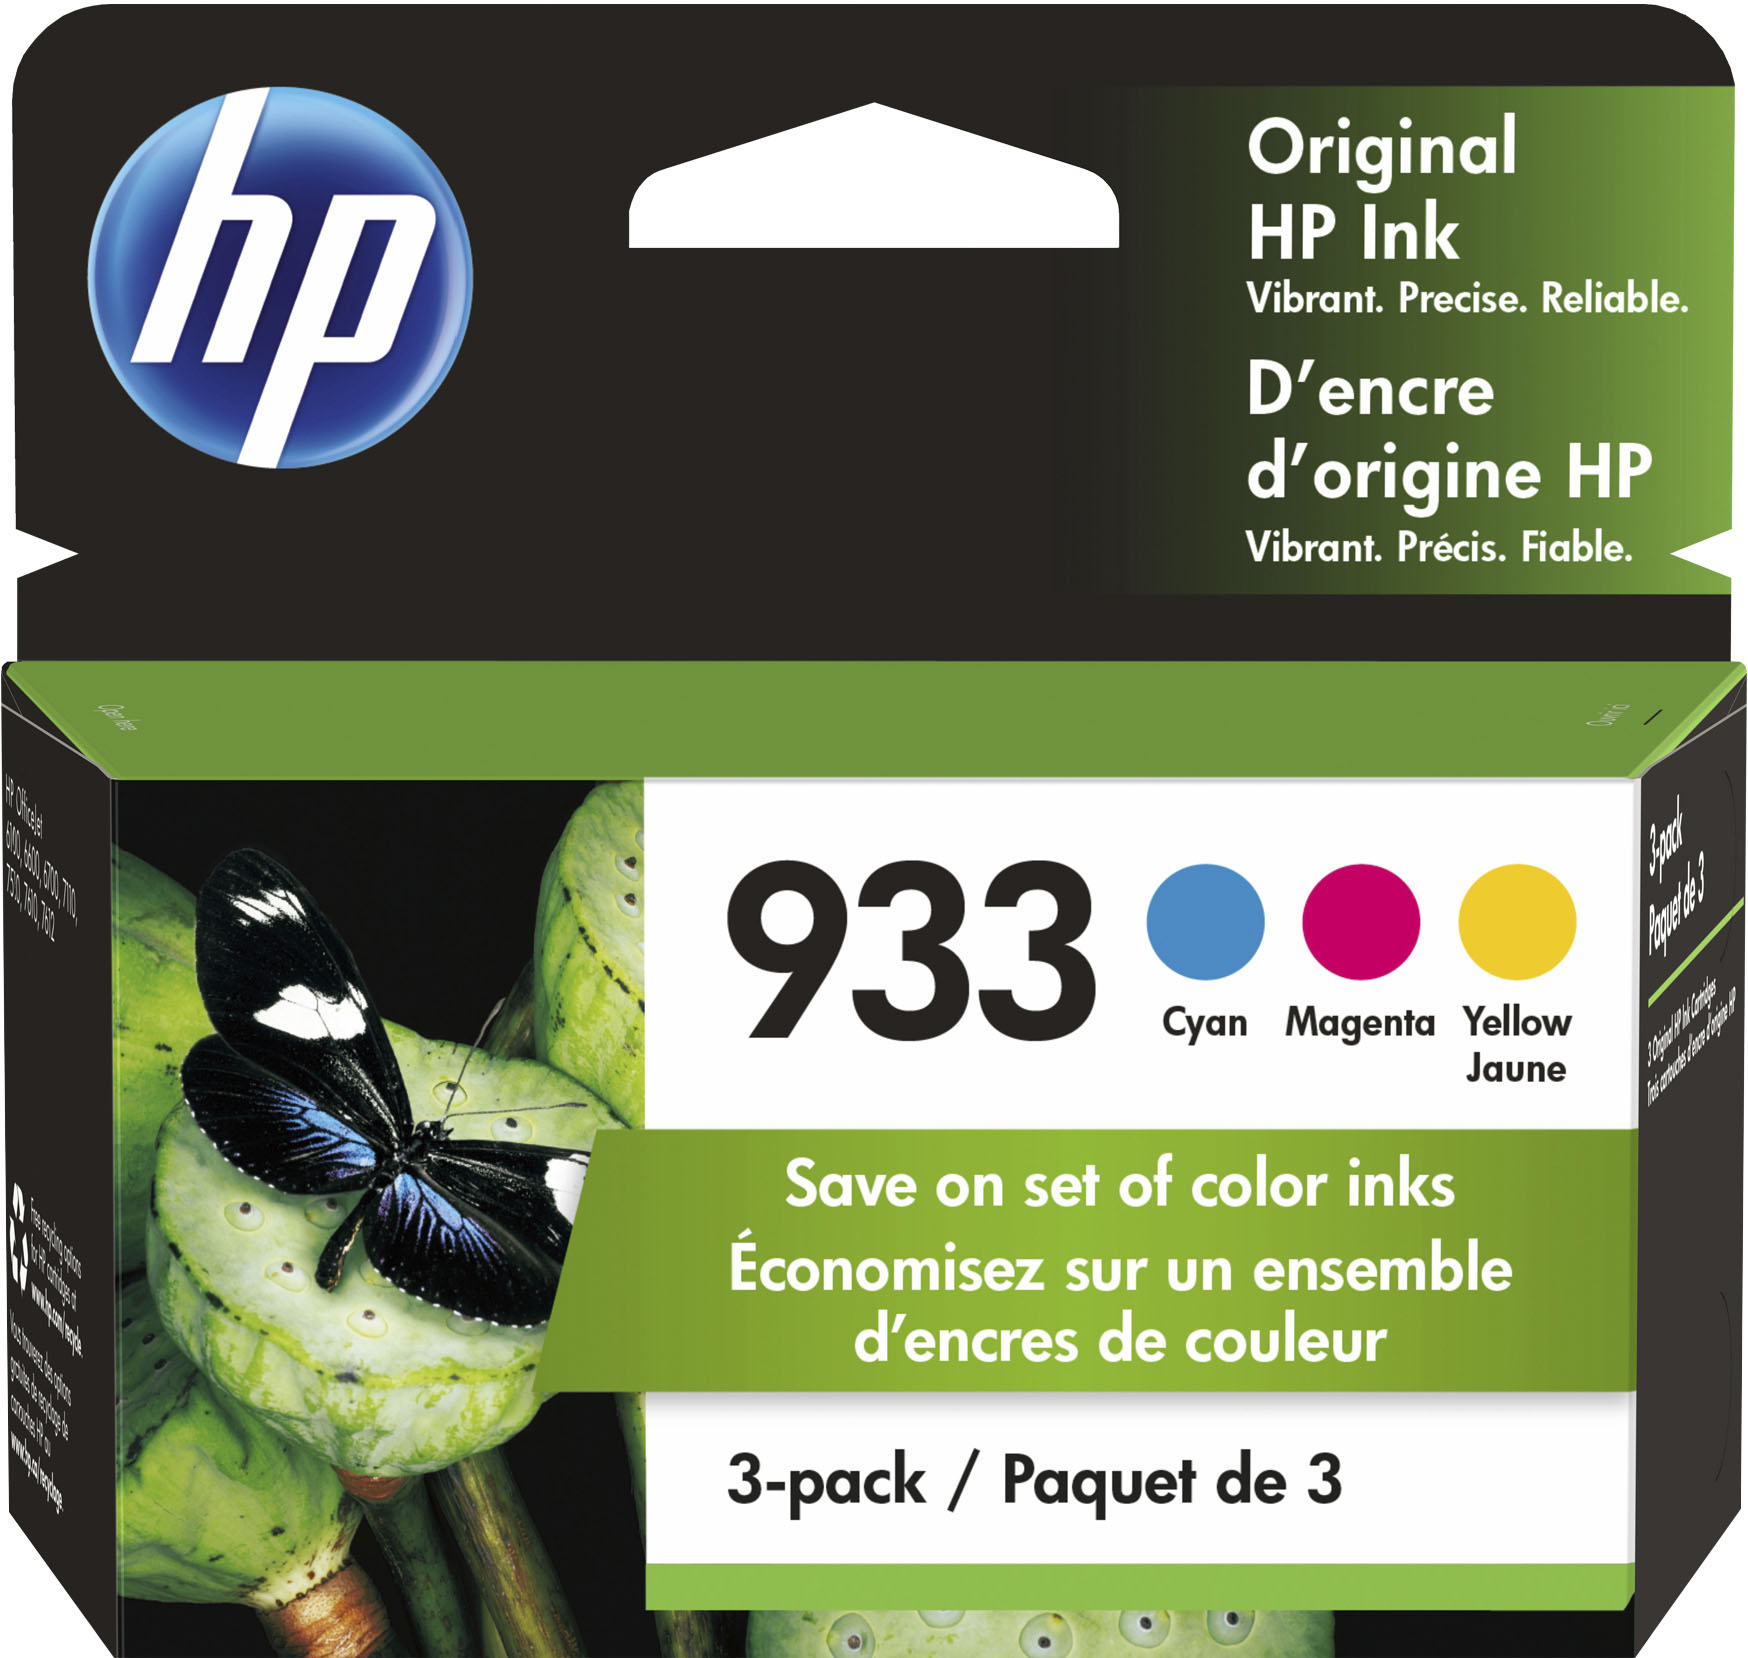 Cartouche compatible HP 903XL - pack de 4 - noir, cyan, magenta, jaune - ink